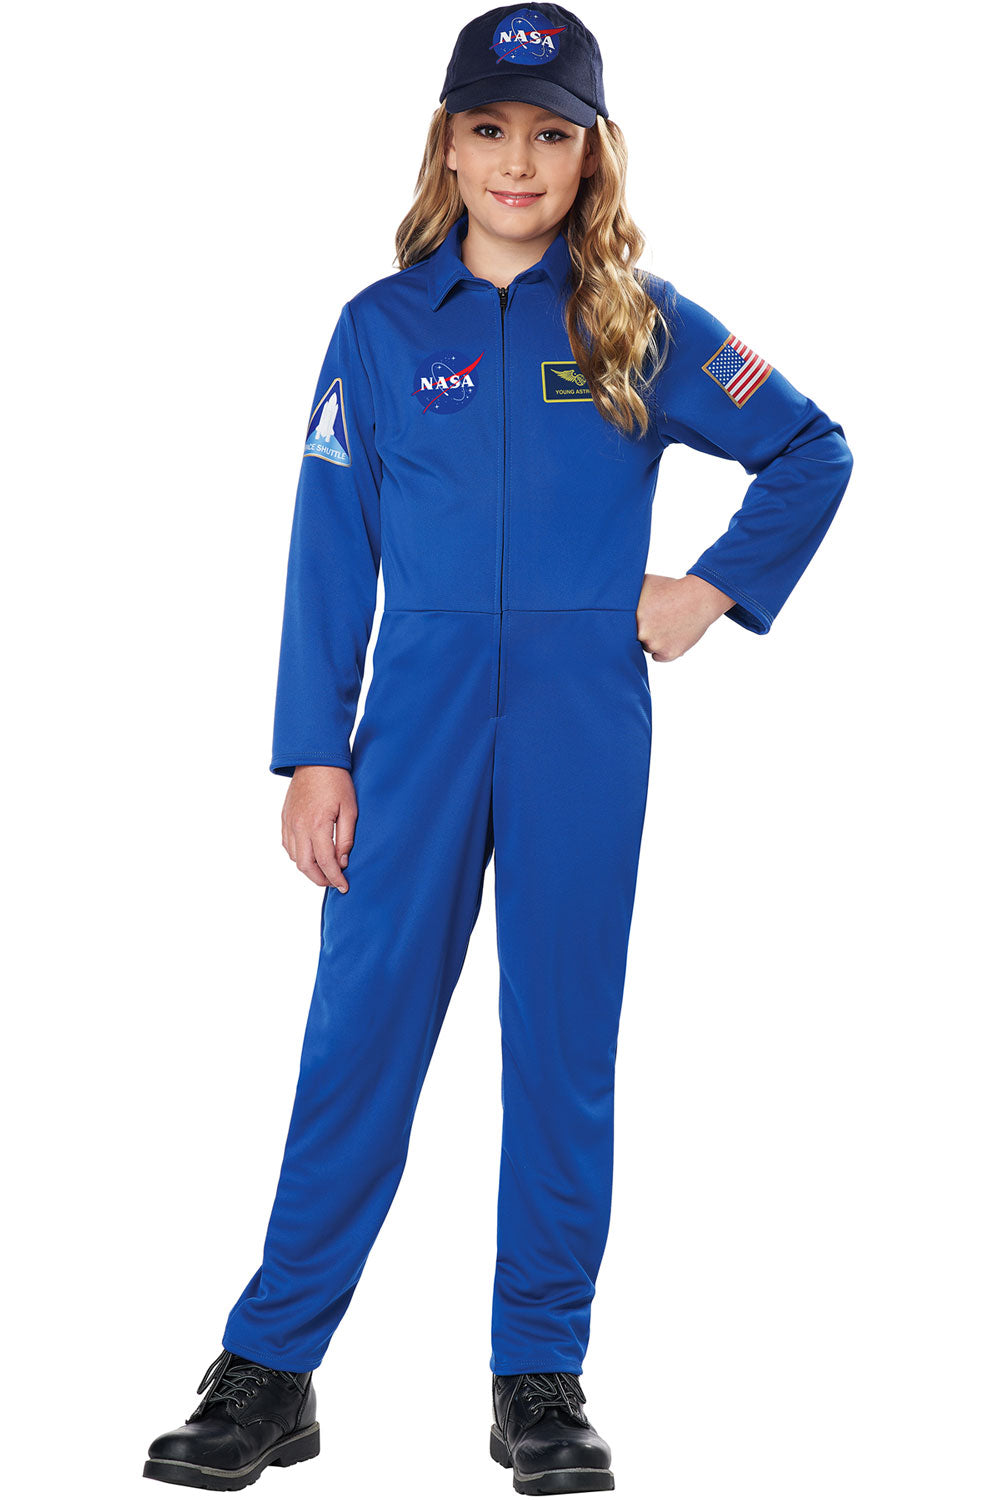 NASA JUMPSUIT/CHILD California Costume 00562